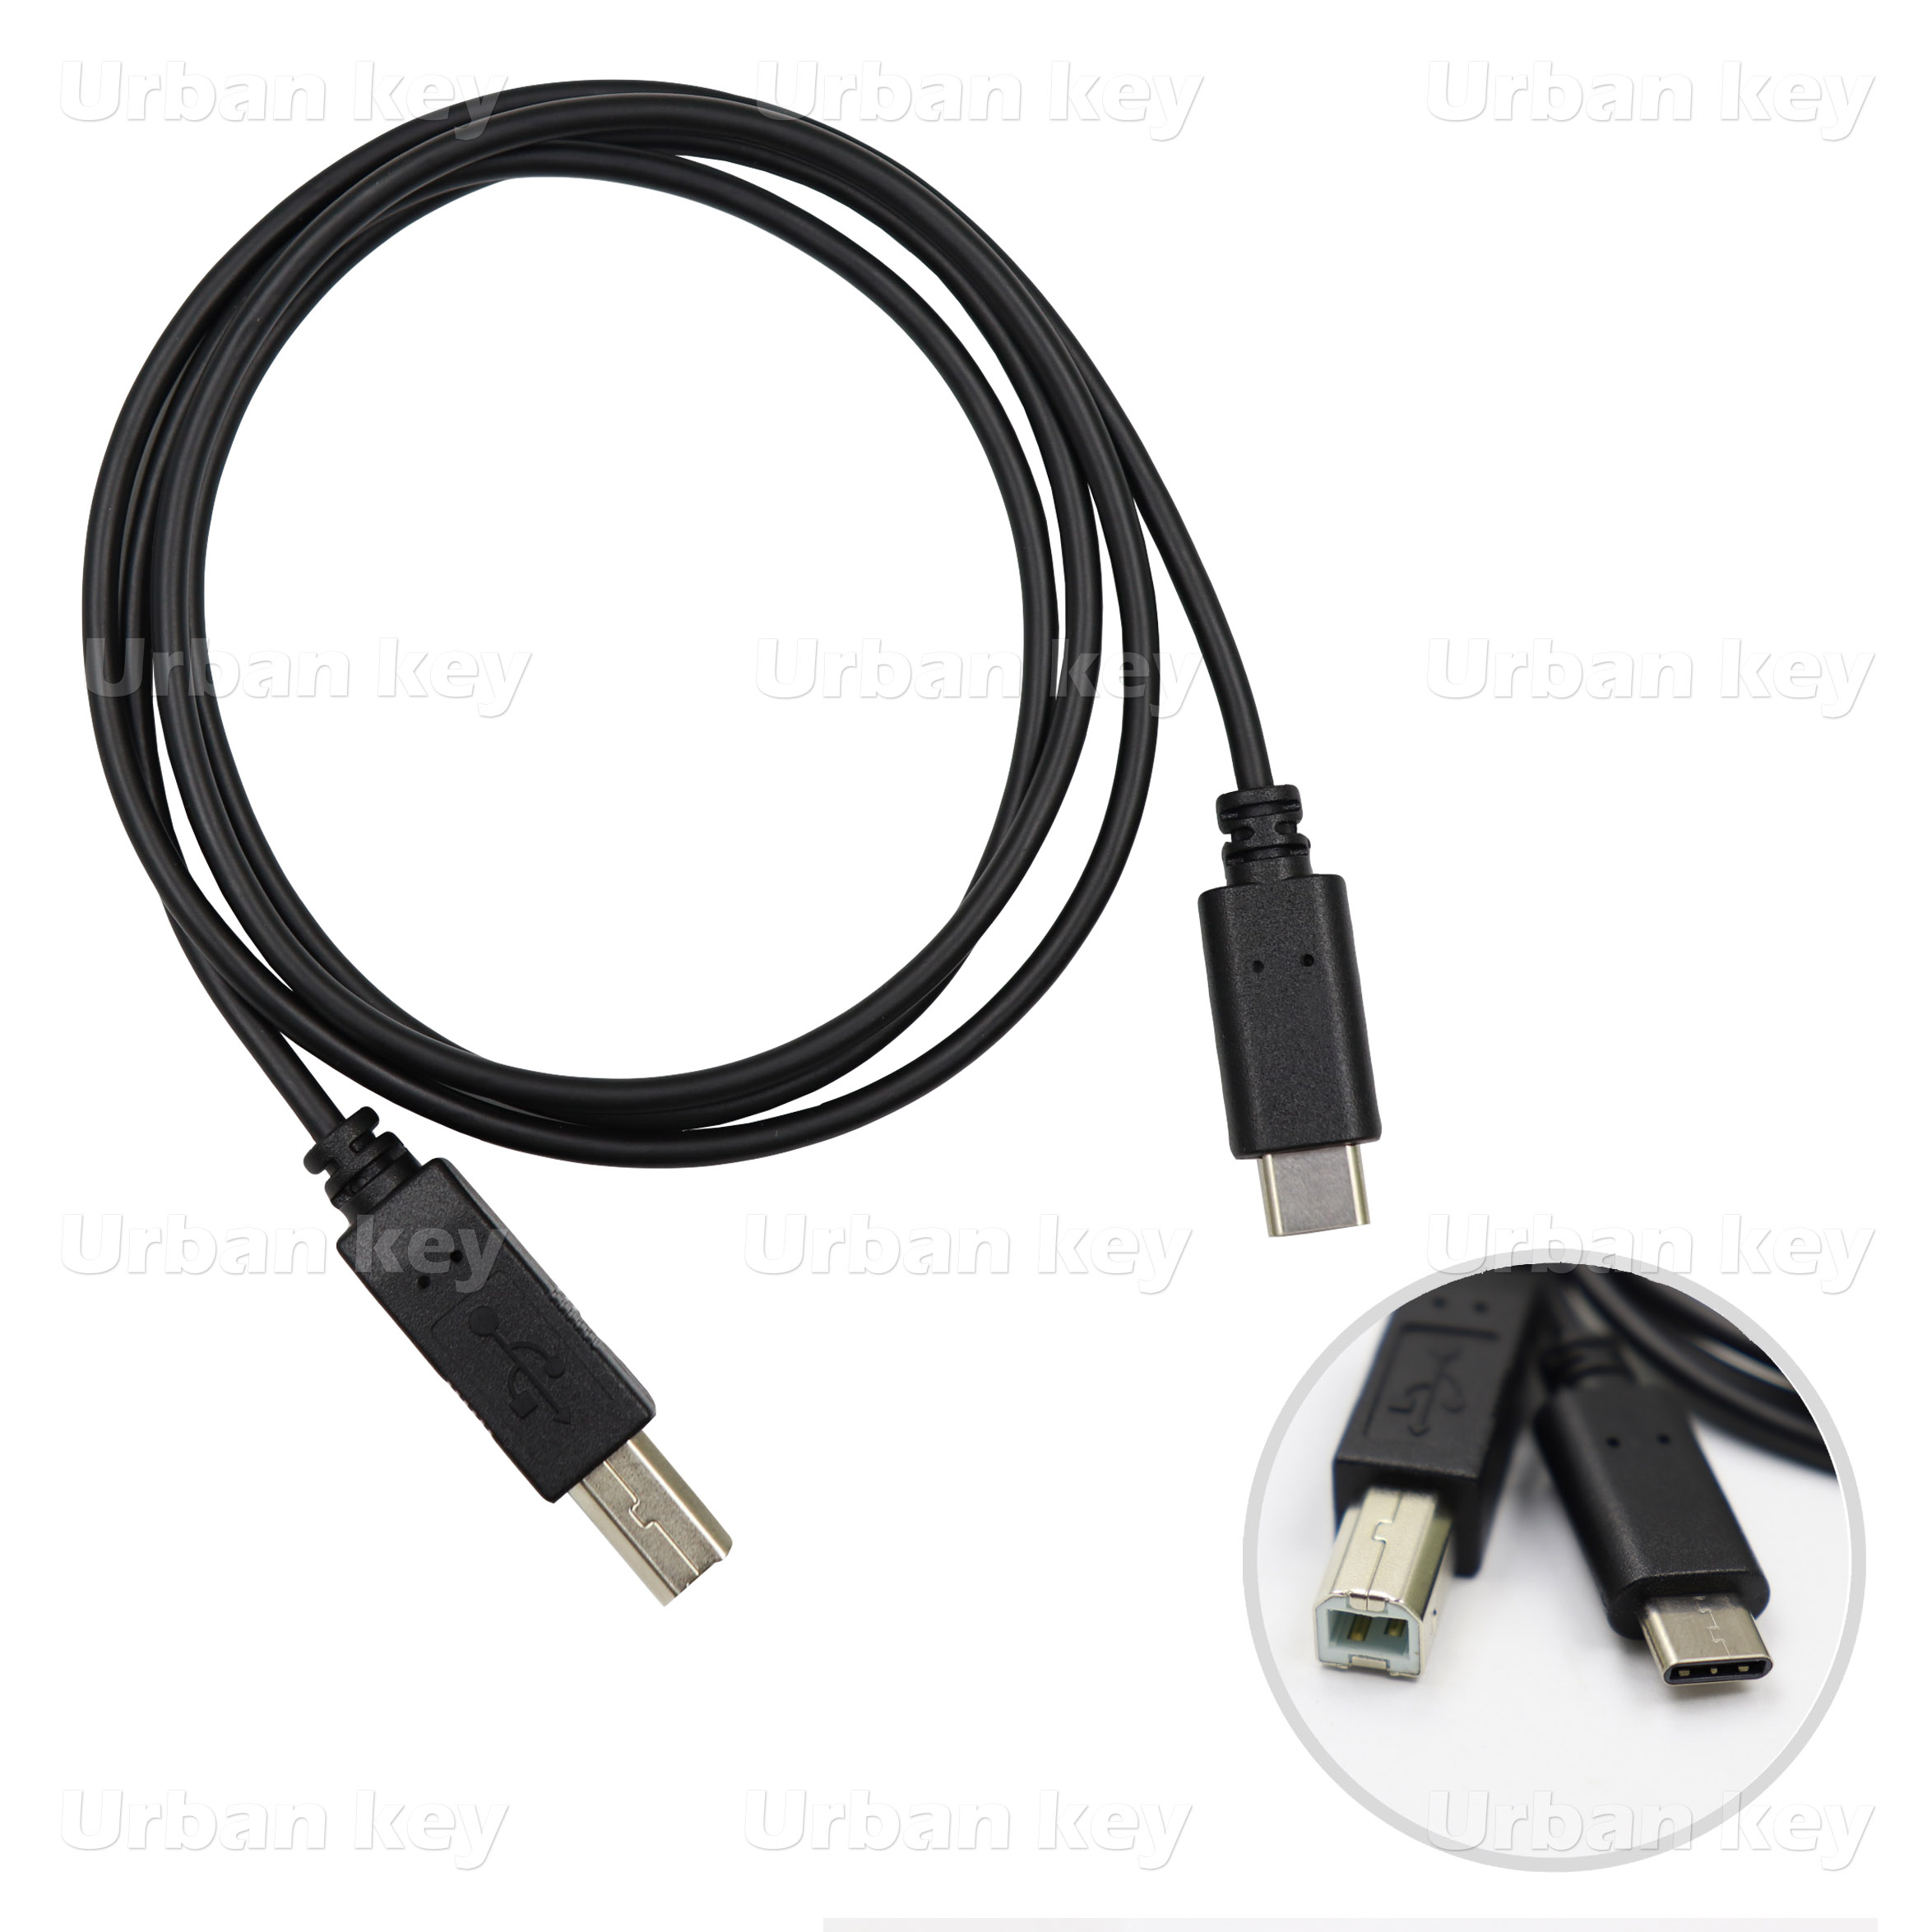 CABO USB IMPRESSORA - USB C